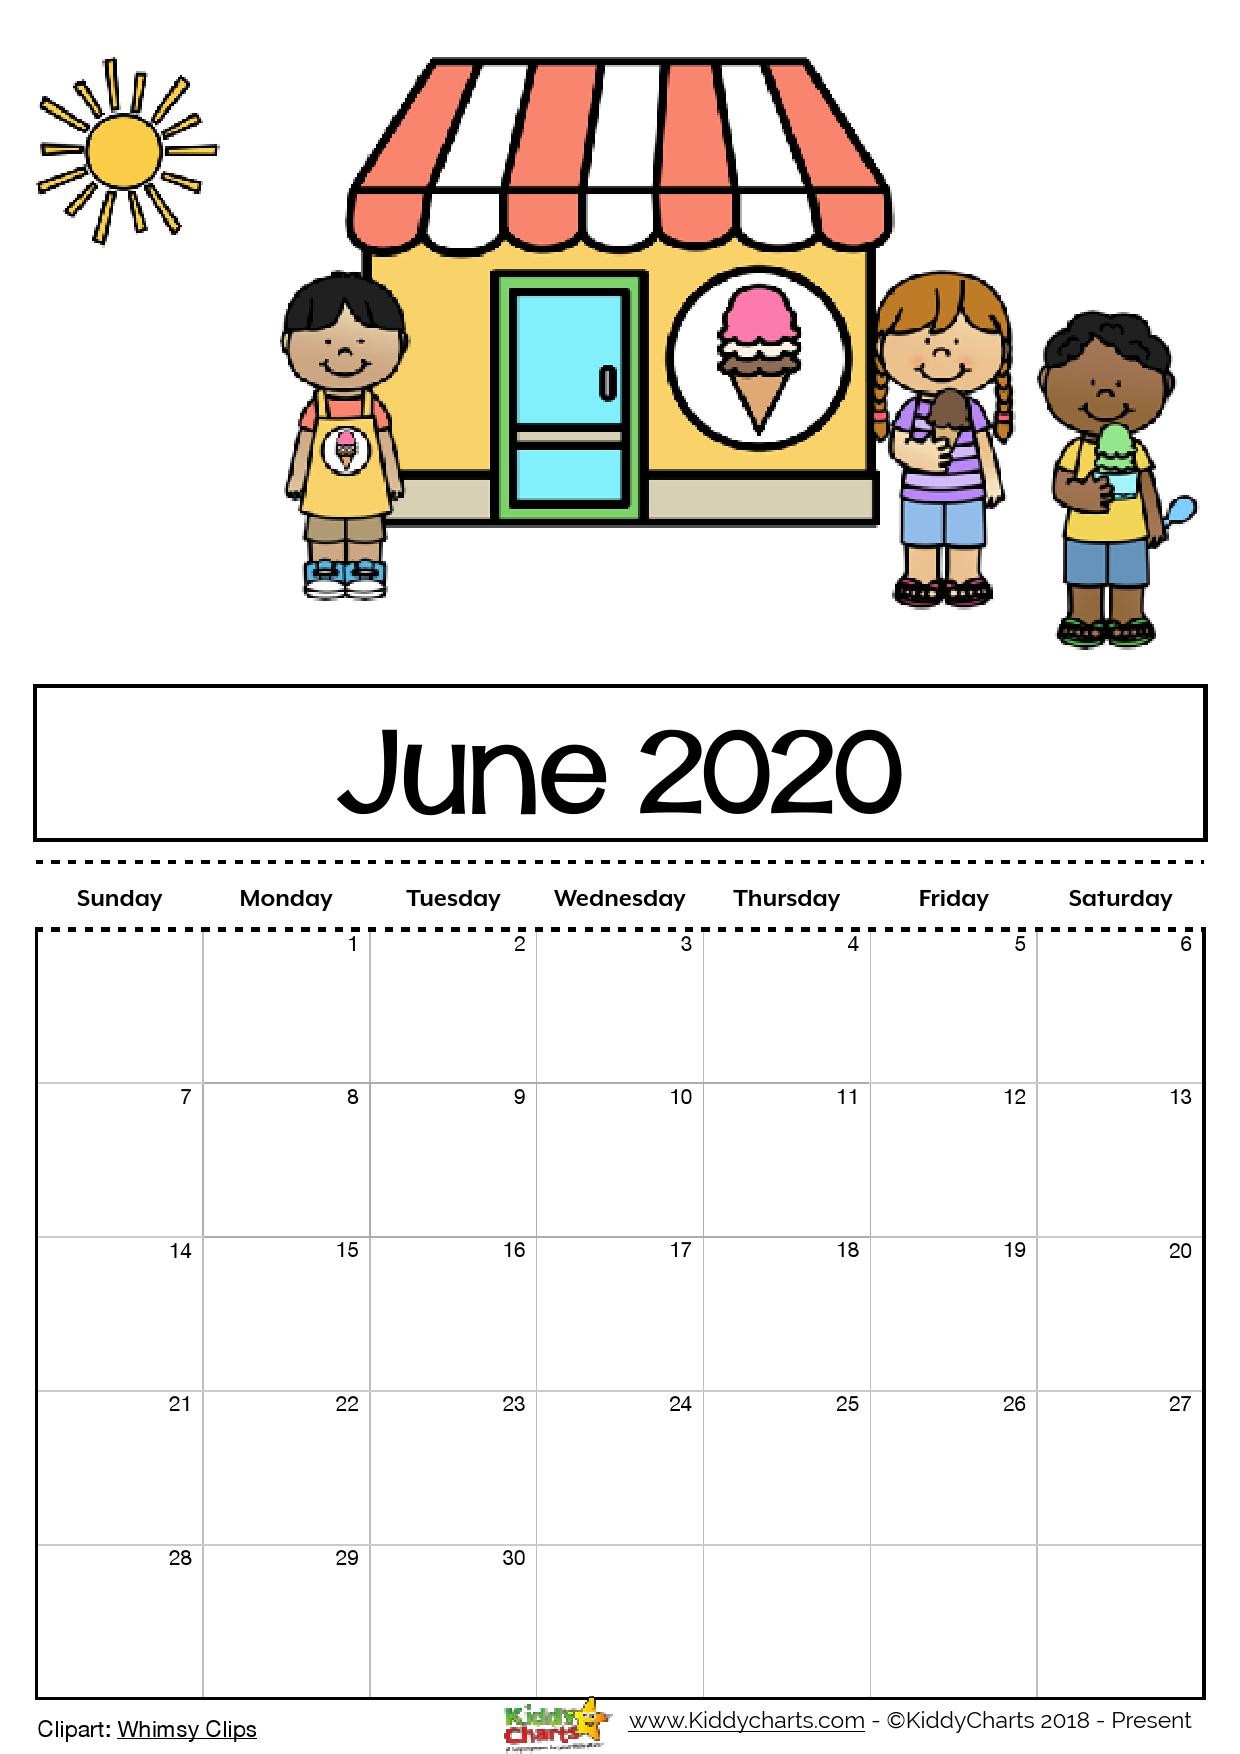 Free Printable 2020 calendar for kids including an